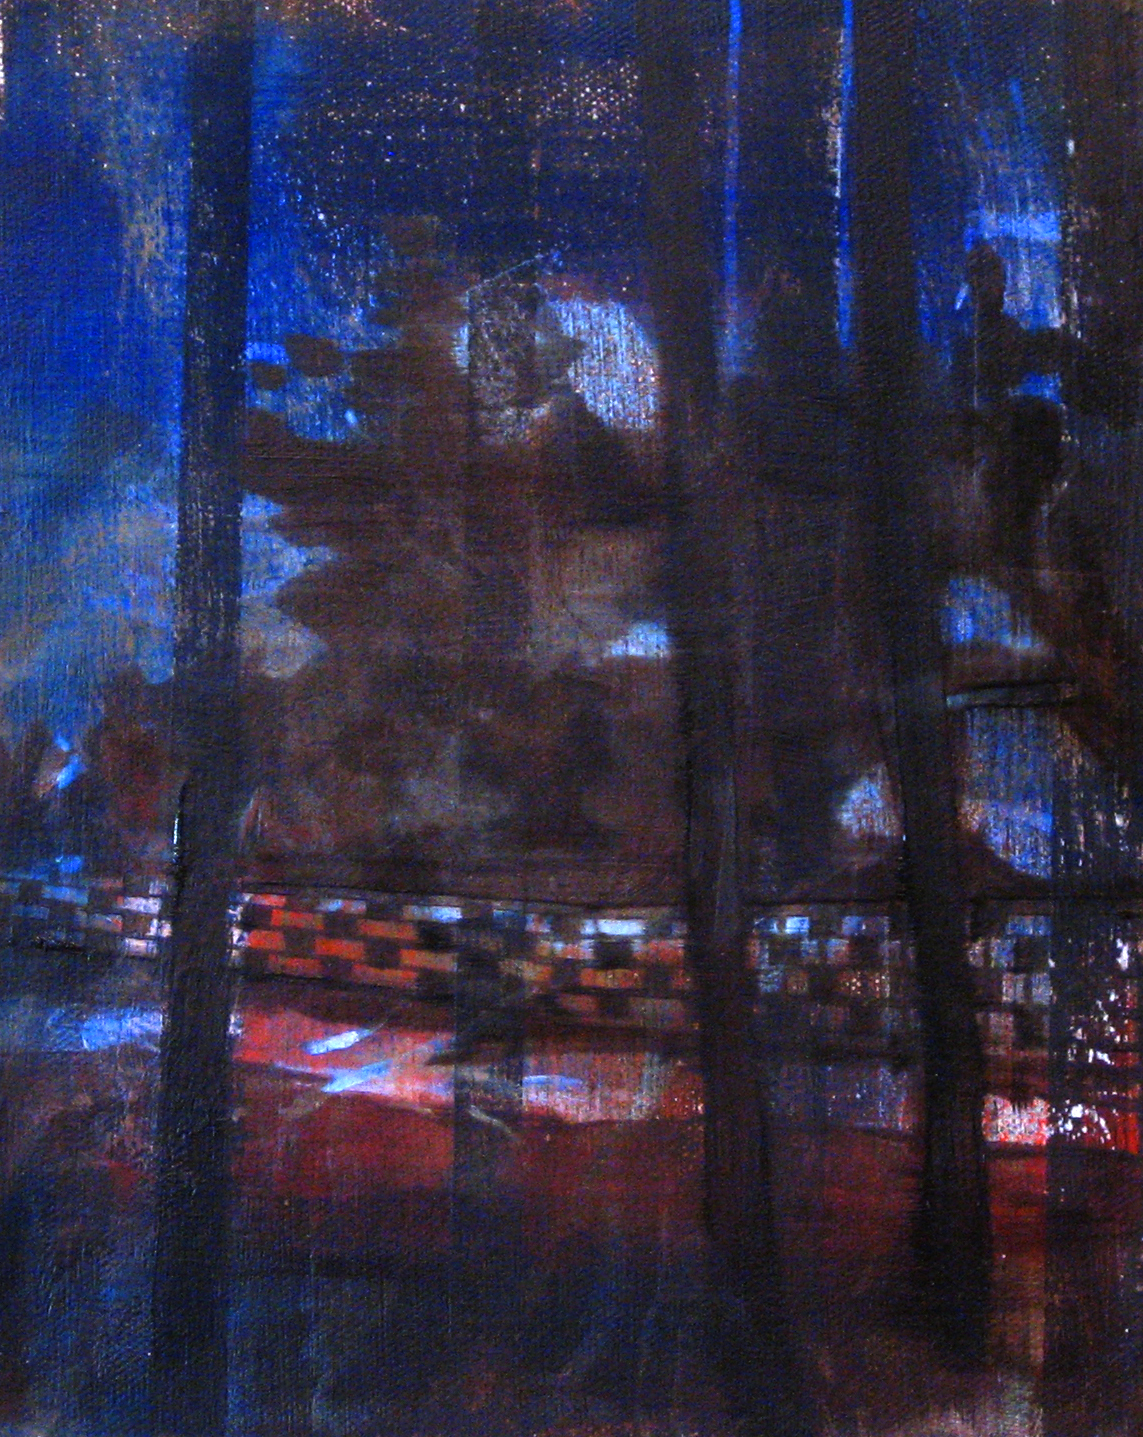   Night Walk   10 x 8  Oil On Canvas  2010 